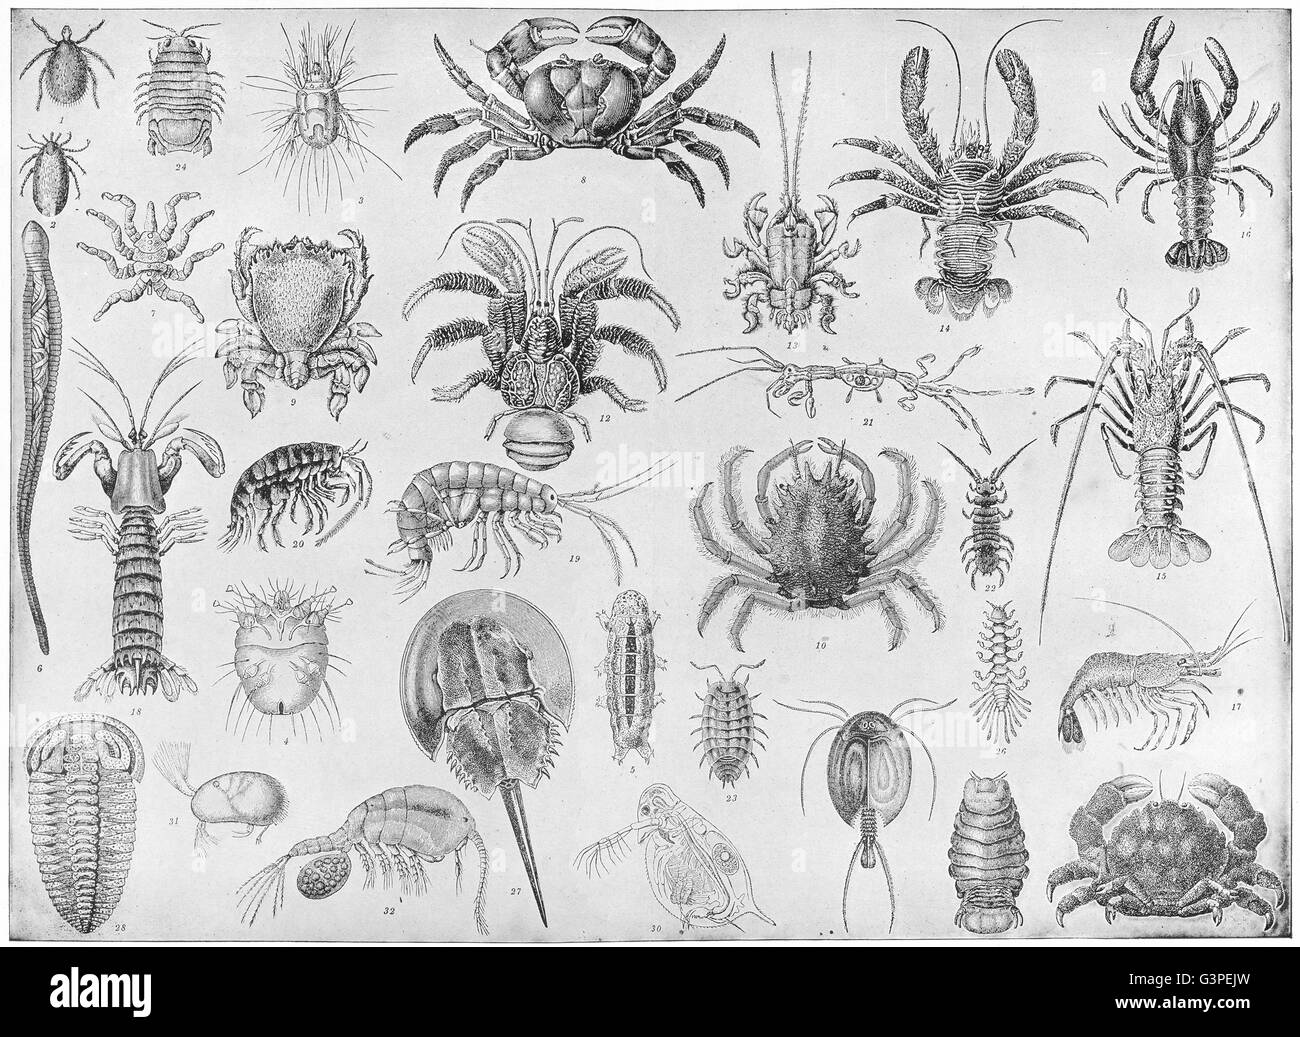 CRUSTACEA: Crab bug louse flea shrimp crayfish prawn lobster Ione Cypria,  1907 Stock Photo - Alamy